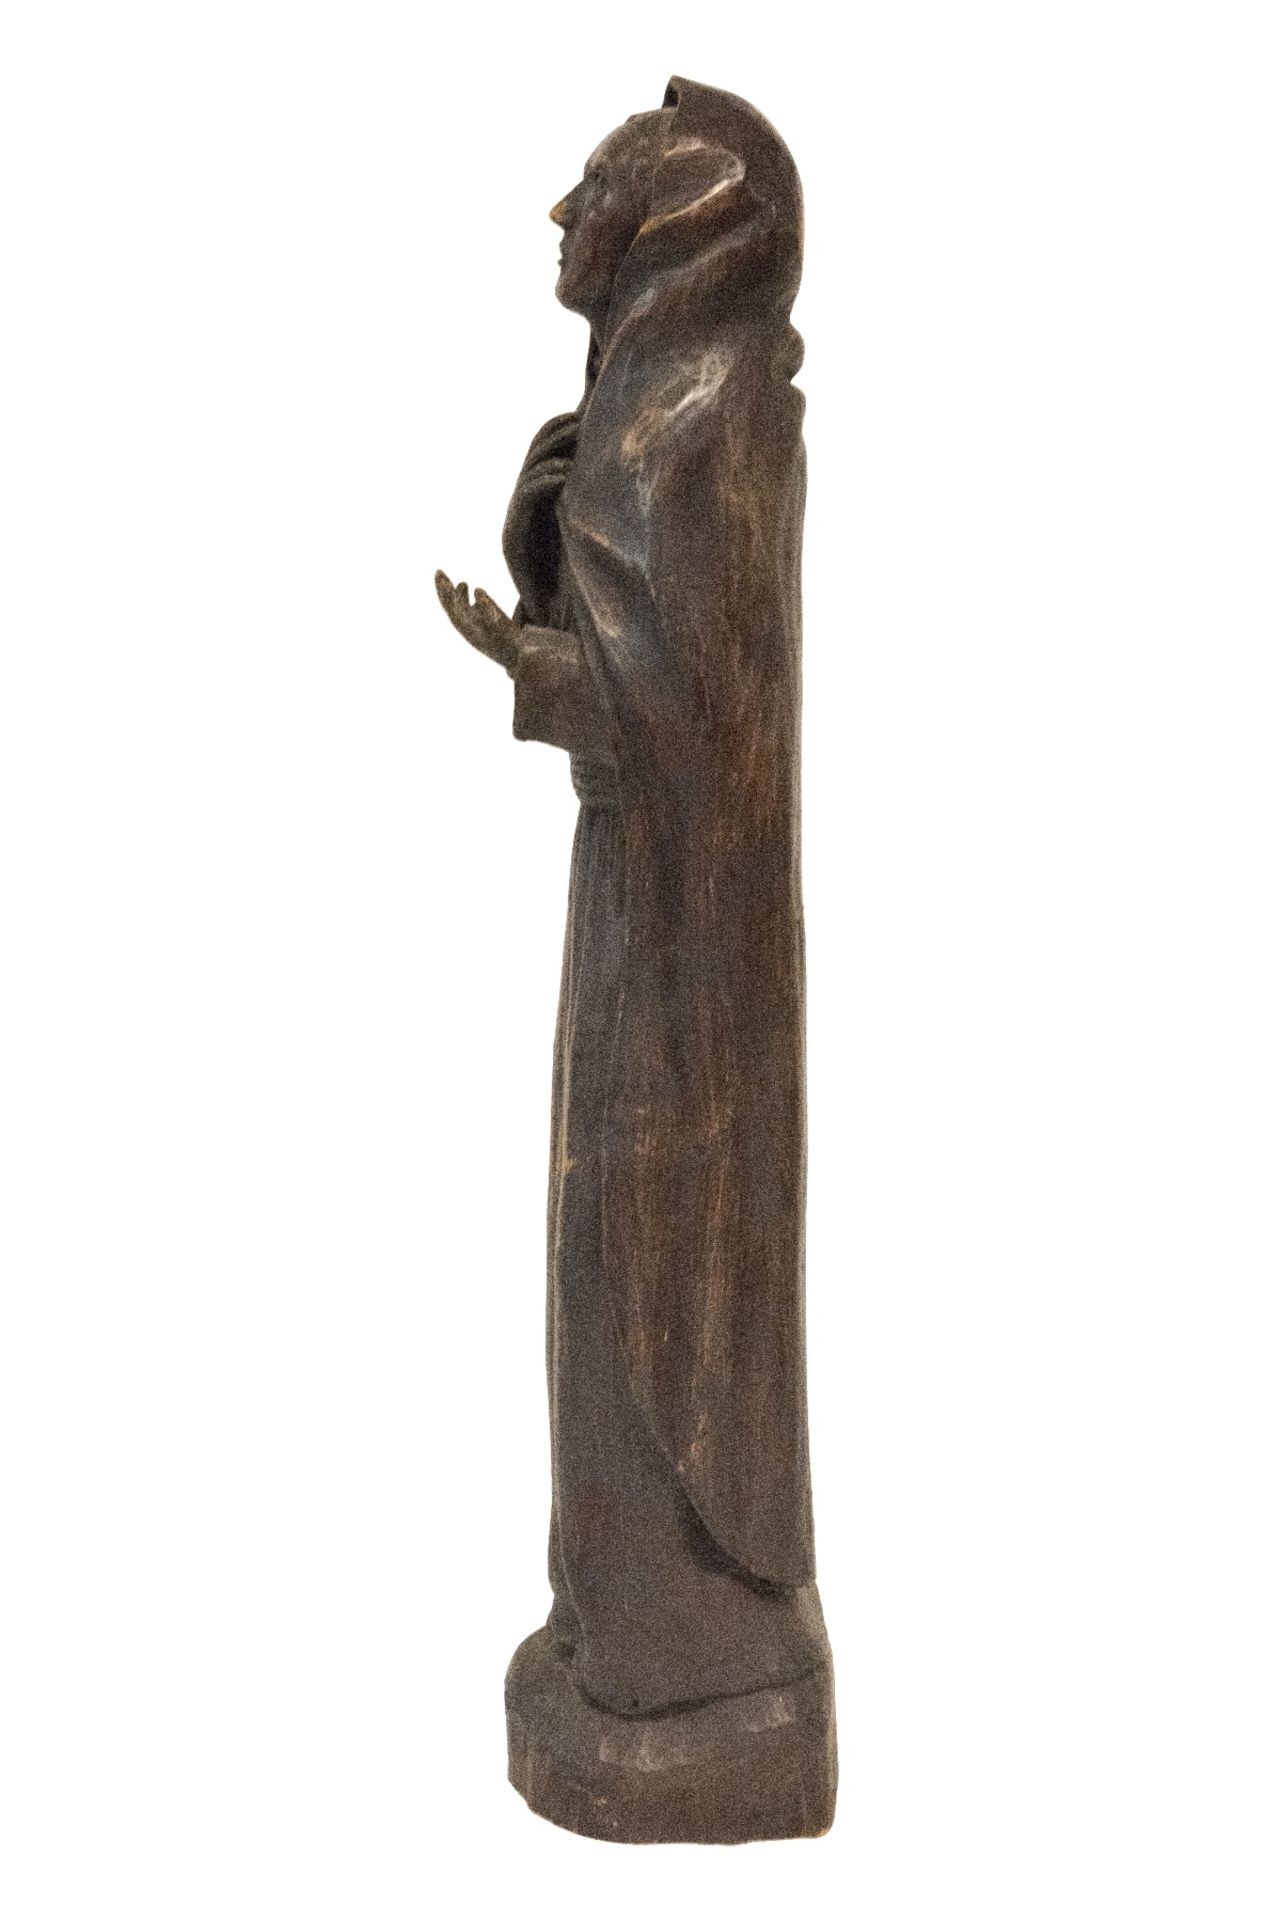 Madonna Holzskulptur | Madonna Wood Sculpture - Image 3 of 5